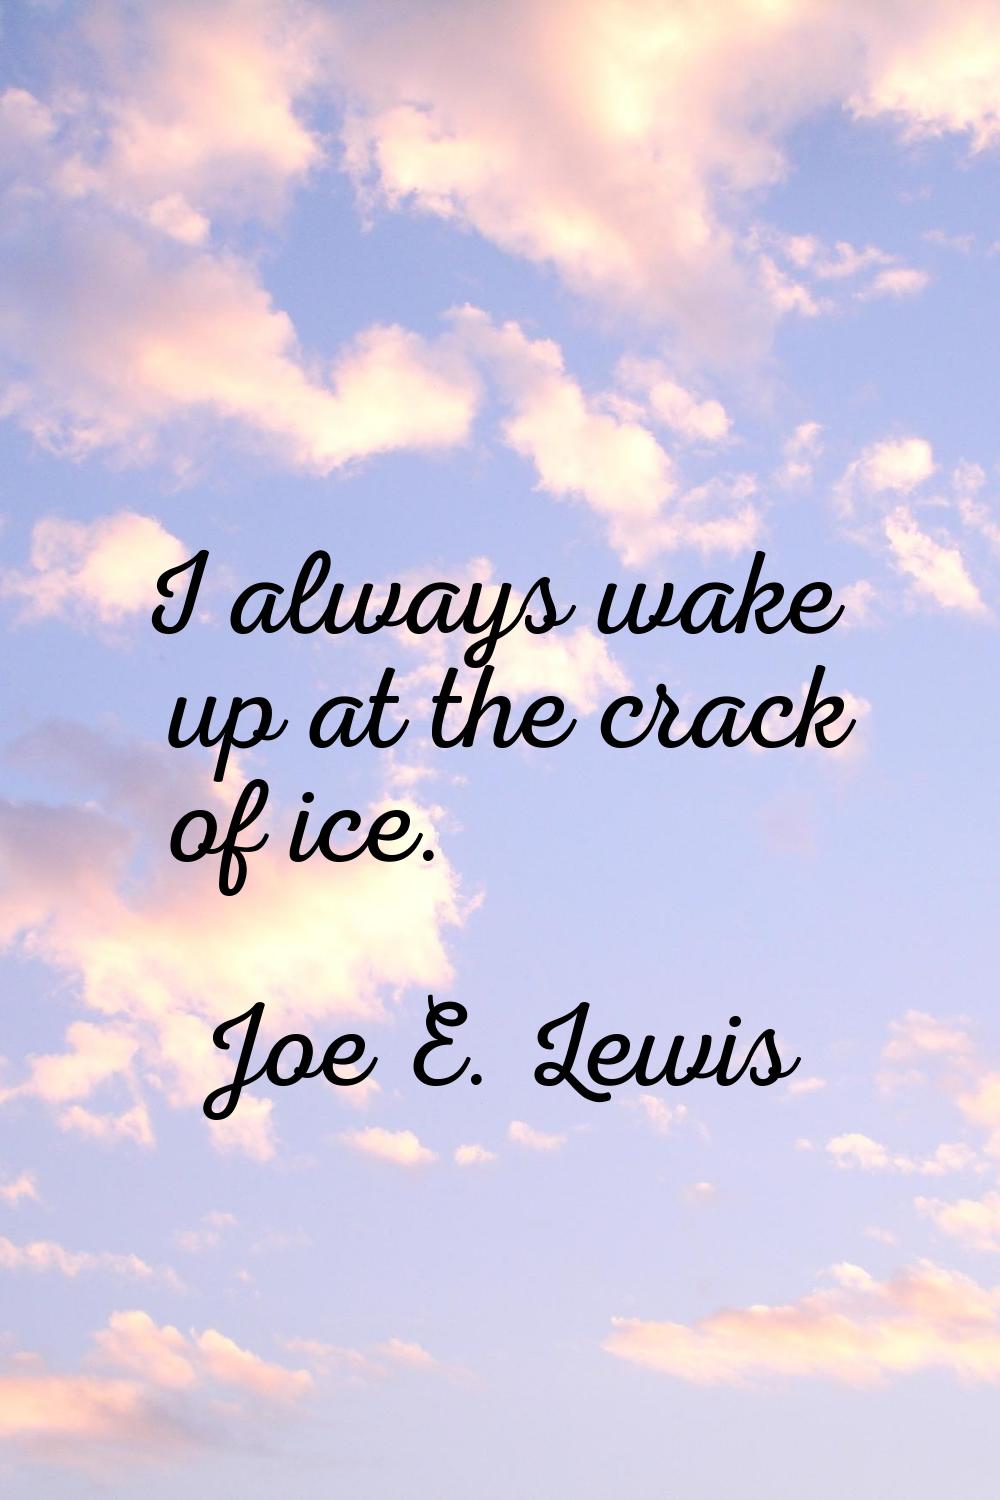 I always wake up at the crack of ice.